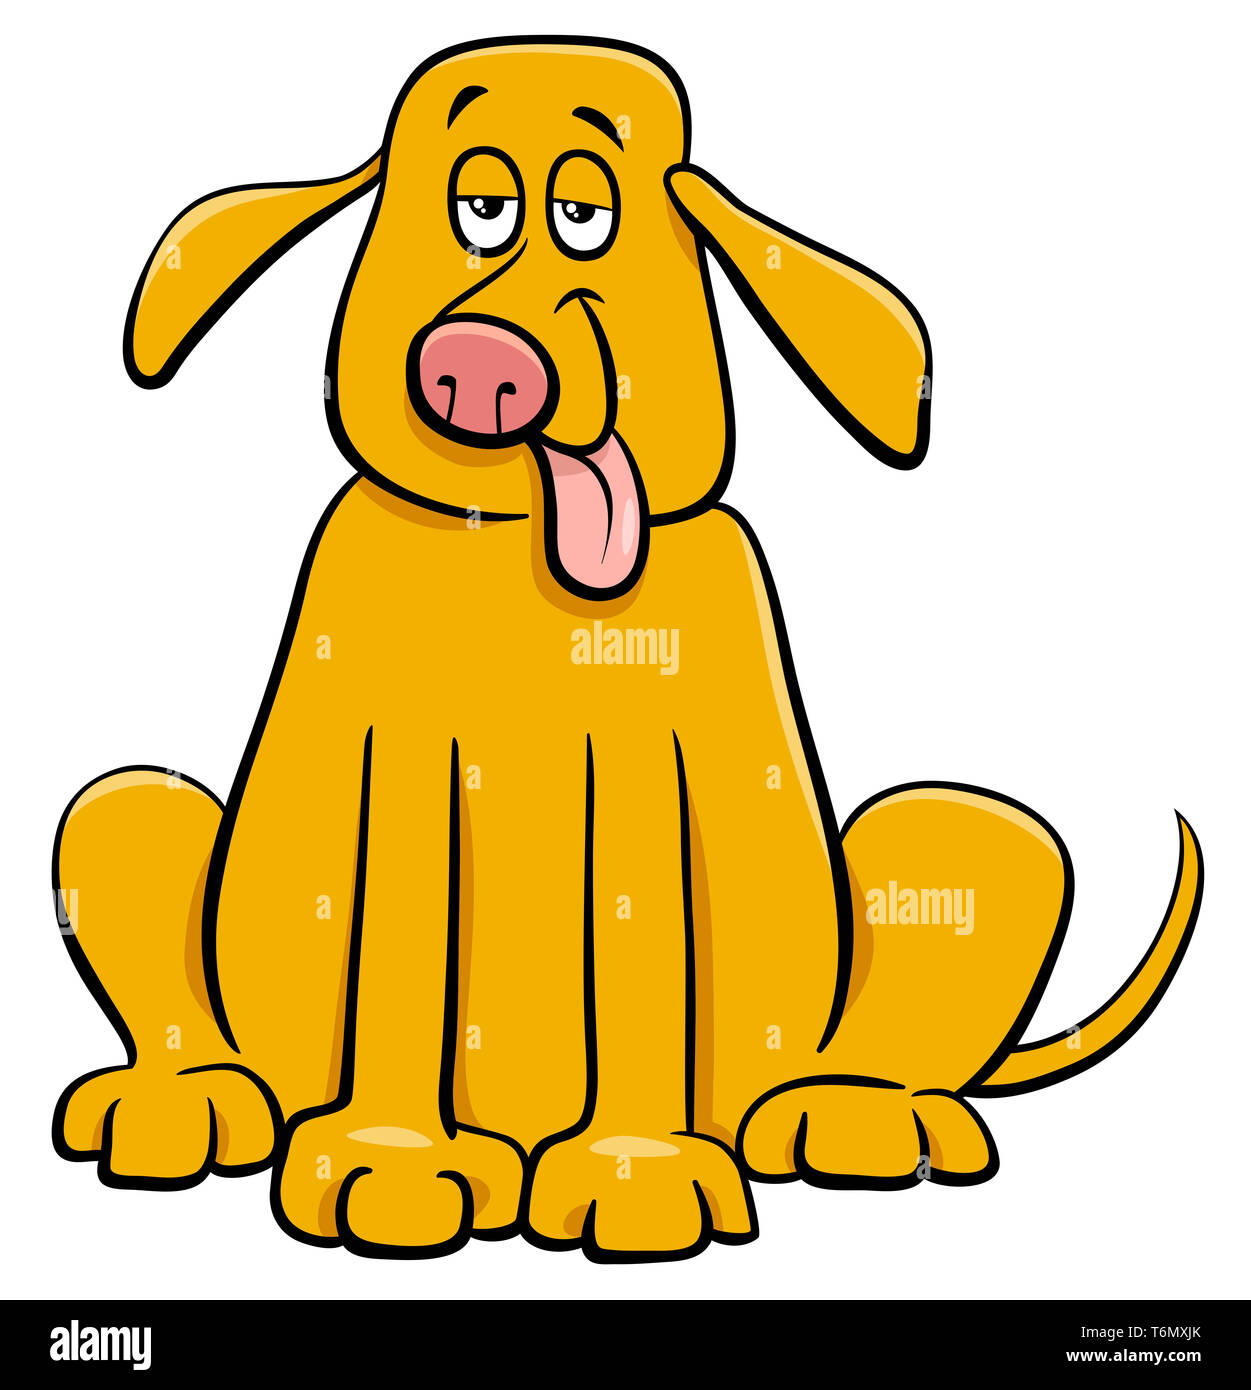 funny yellow dog pet cartoon character Stock Photo - Alamy